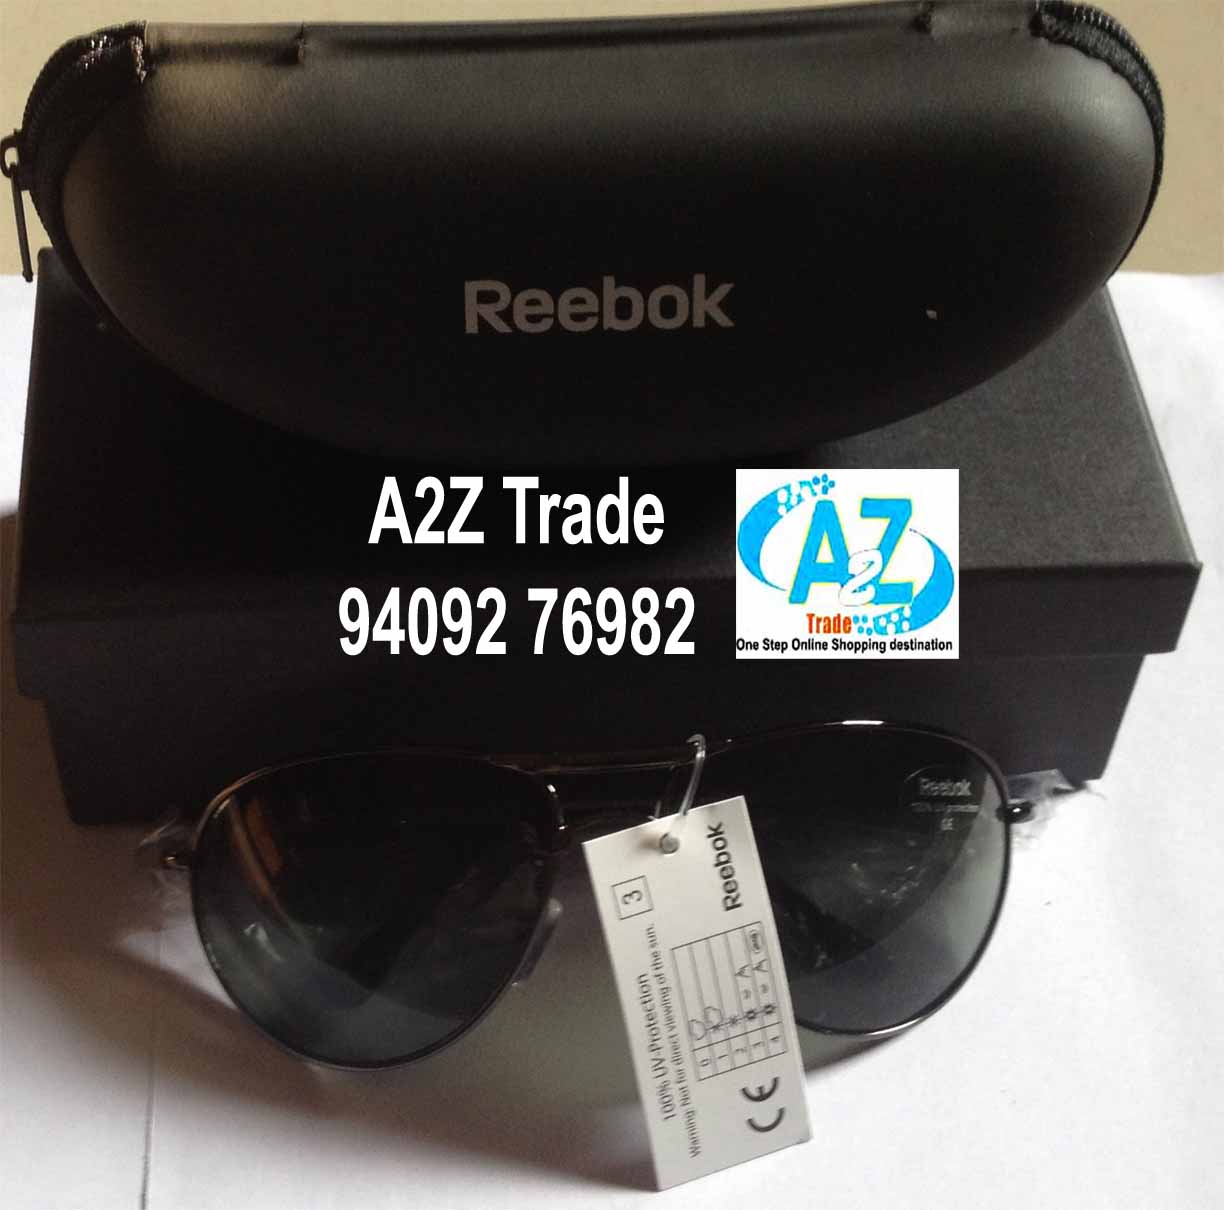 reebok sunglasses online purchase